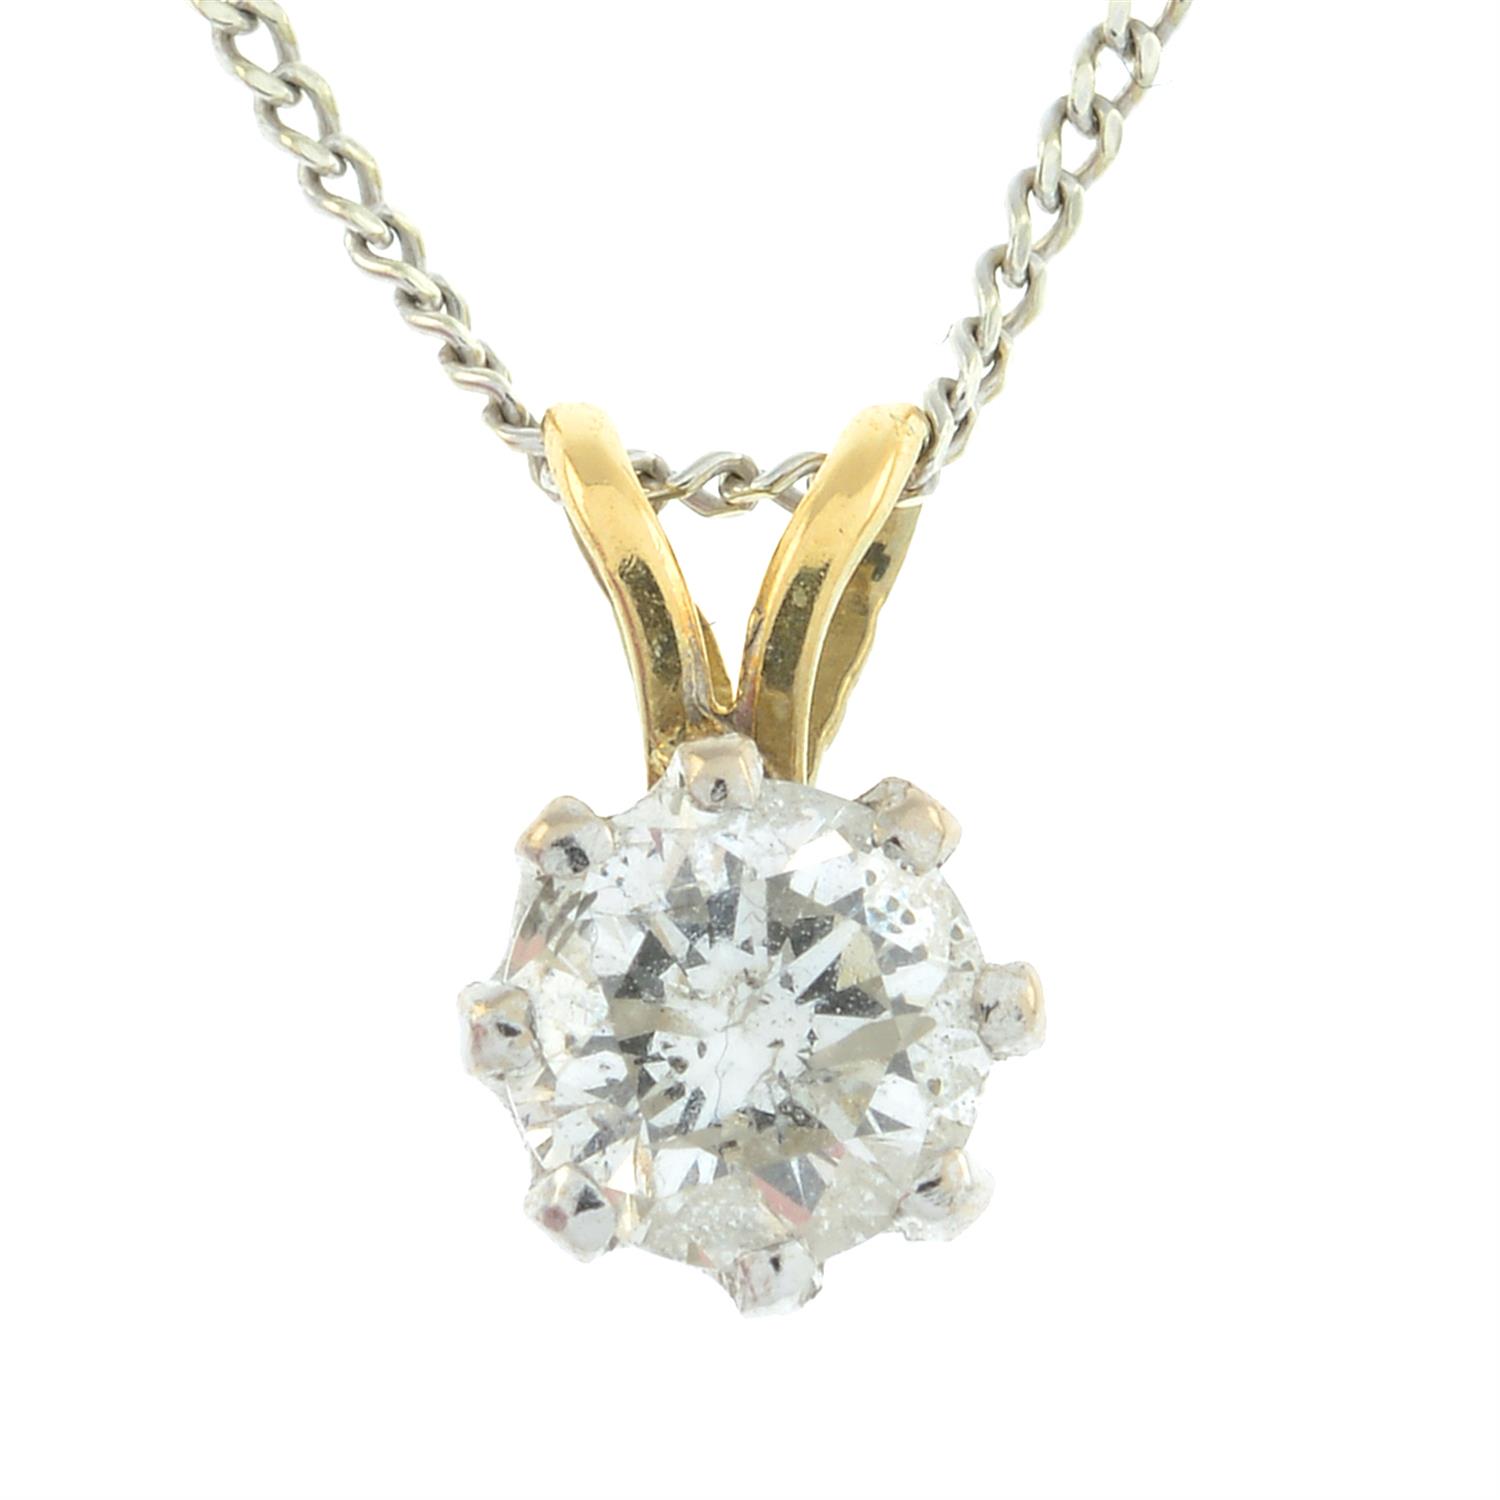 18ct gold diamond pendant & 9ct gold chain